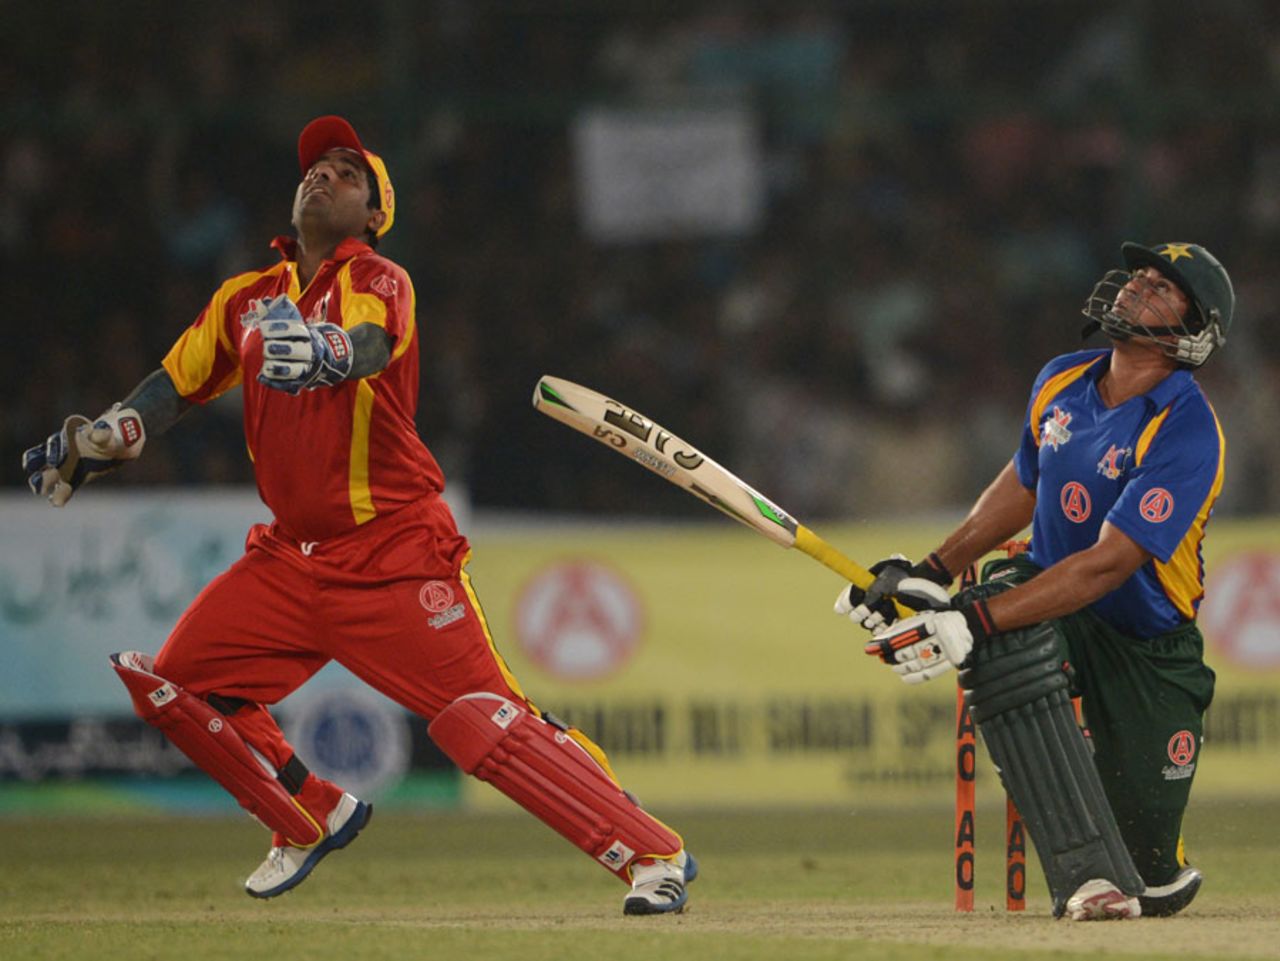 Mohammad Shahzad and Nasir Jamshed eye the ball, Pakistan All Star XI v International XI, Karachi, October 20, 2012